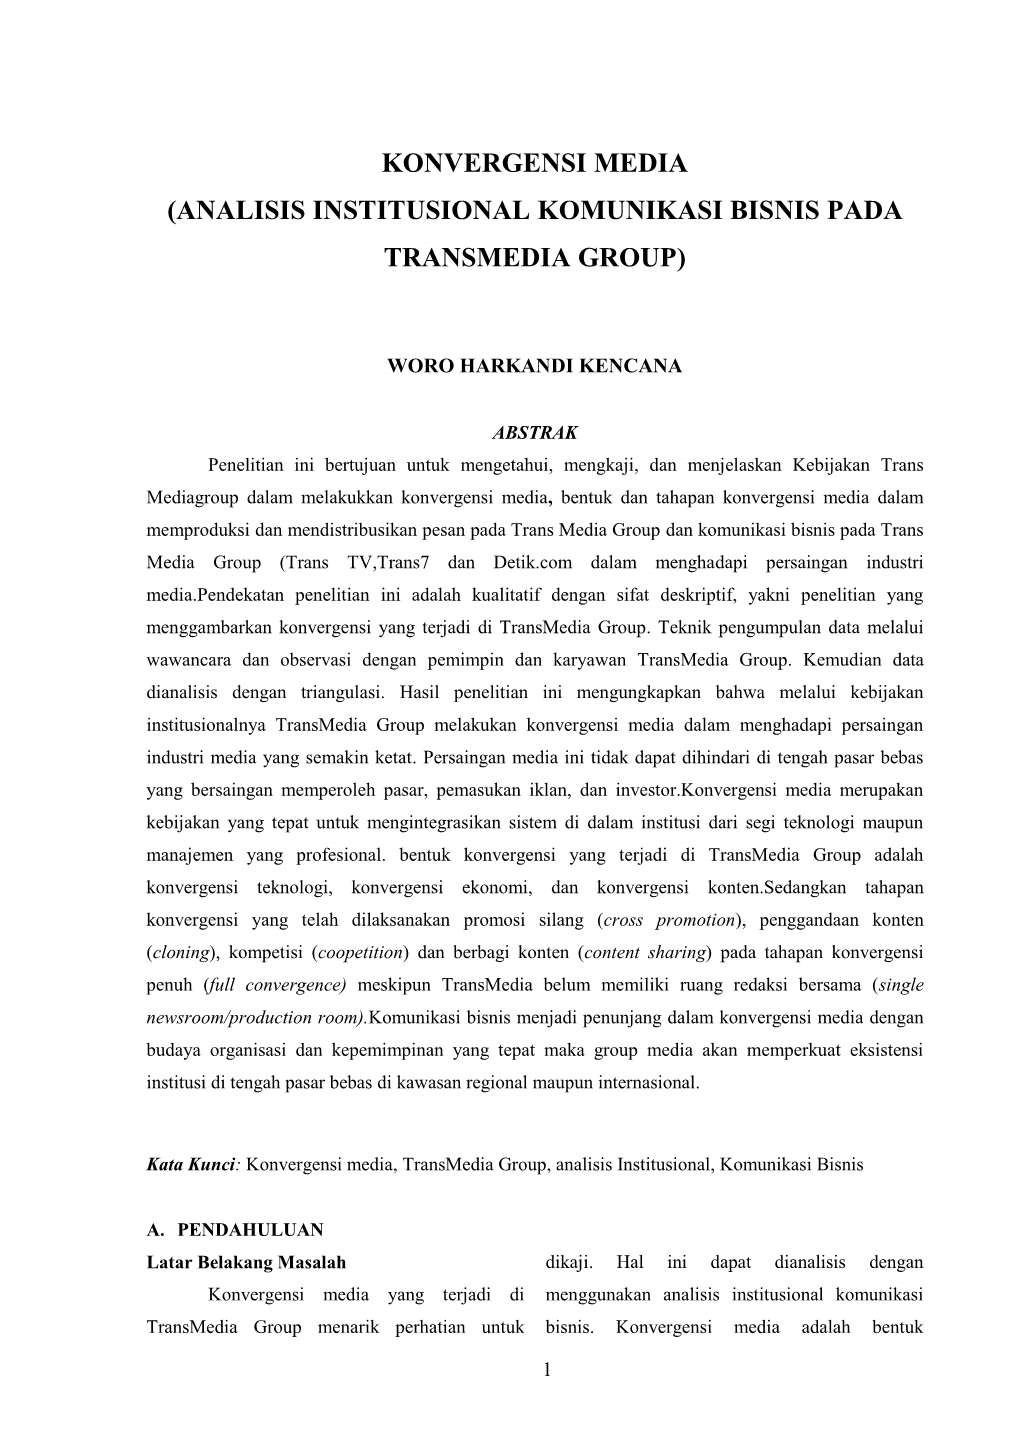 Analisis Institusional Komunikasi Bisnis Pada Transmedia Group)